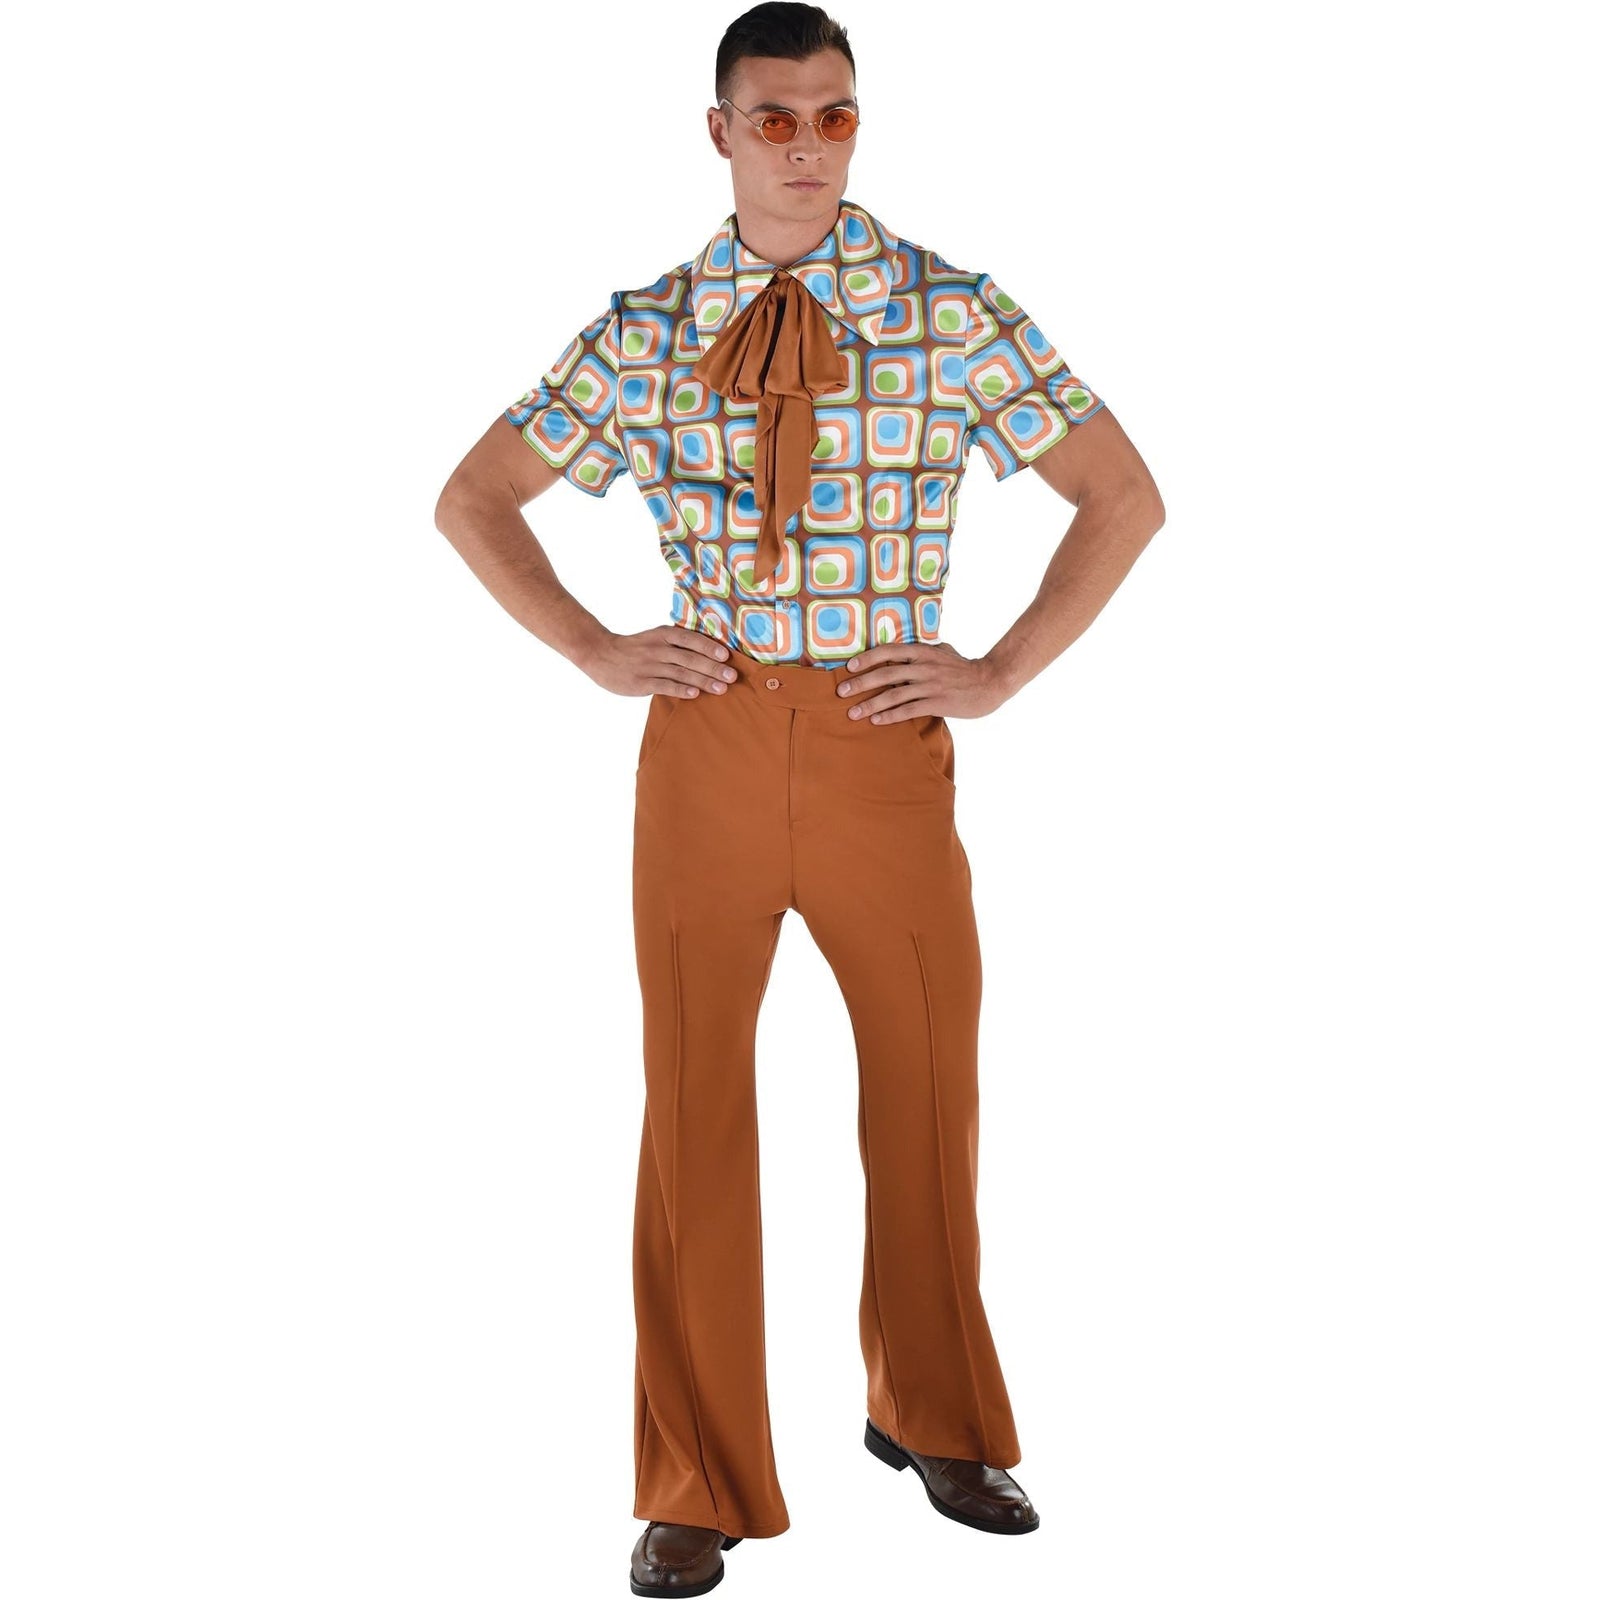 Leg Avenue Mens Bell Bottom Pants in Costumes - $49.99